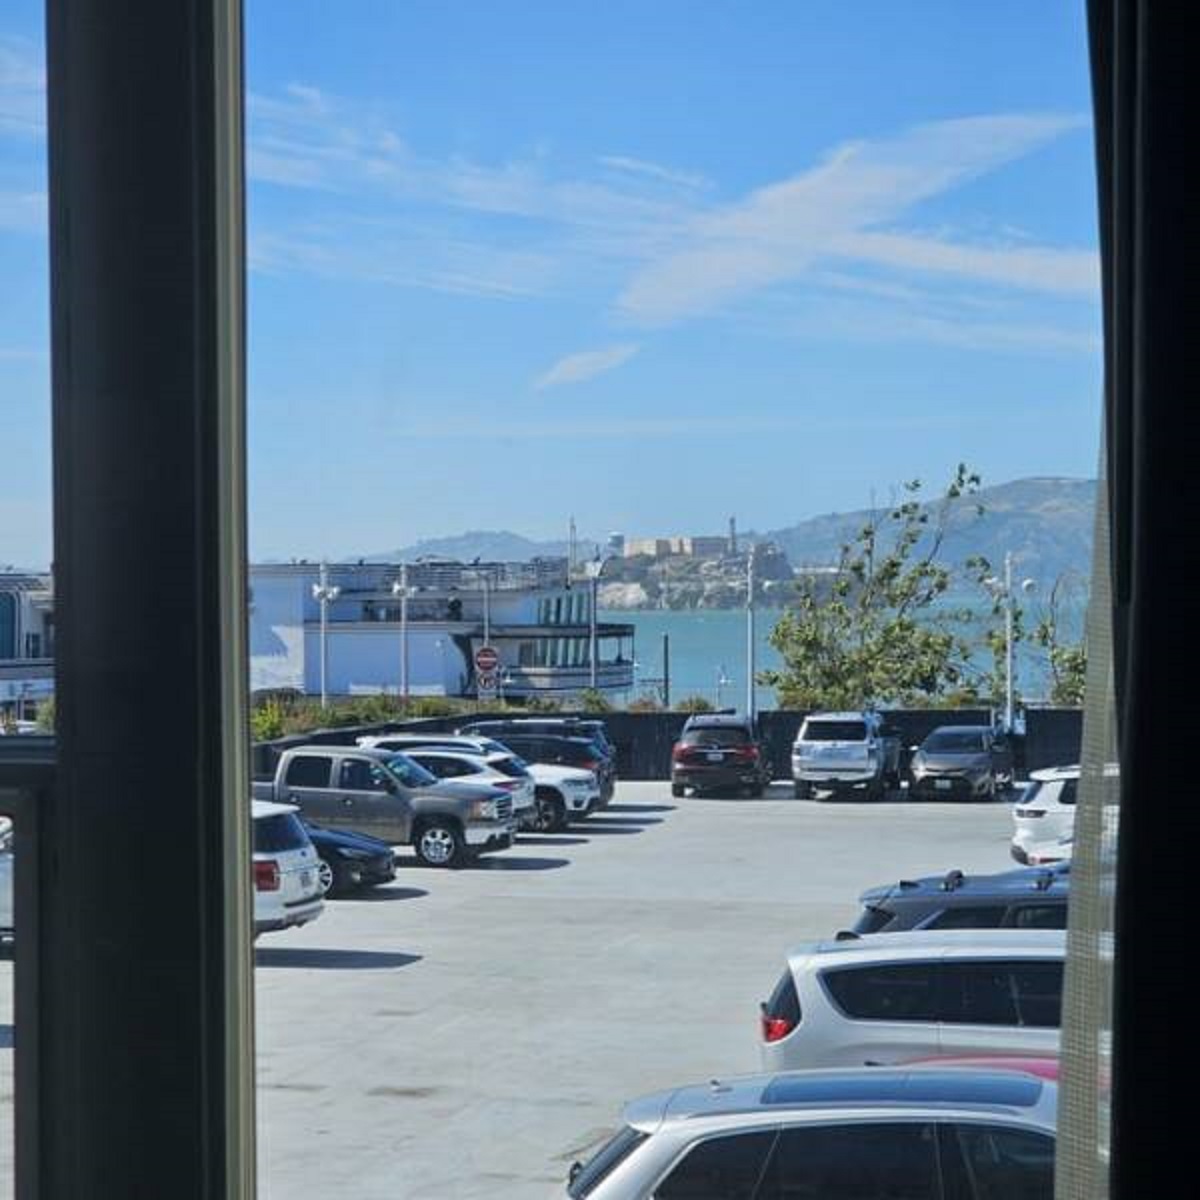 "I can see Alcatraz from my hotel"